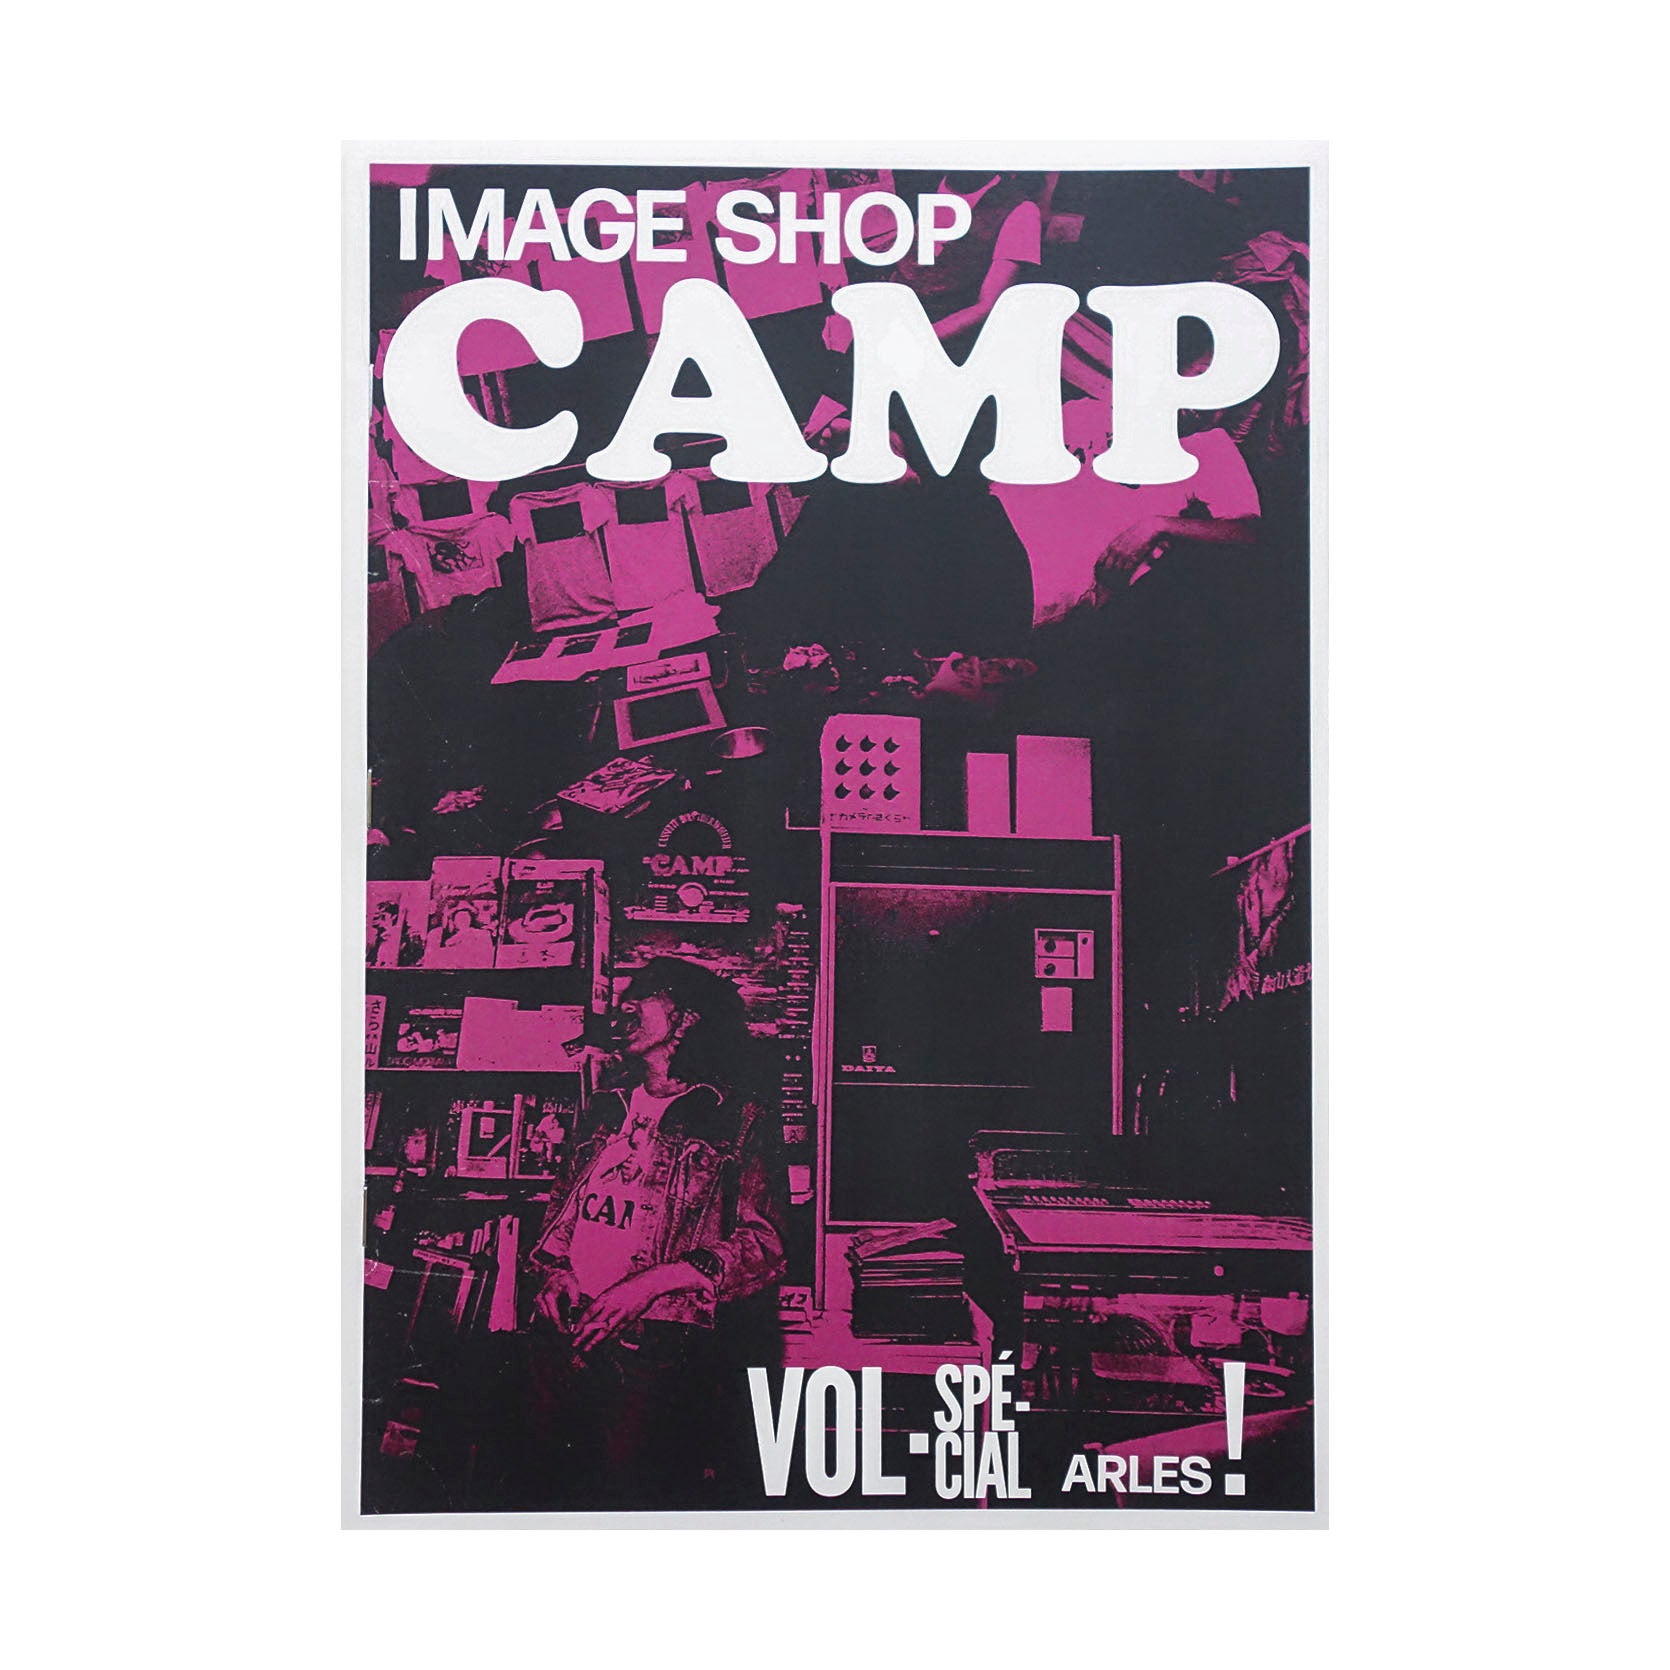 Image Shop Camp Vol - Spécial Arles ! (SILKSCREEN VERSION)